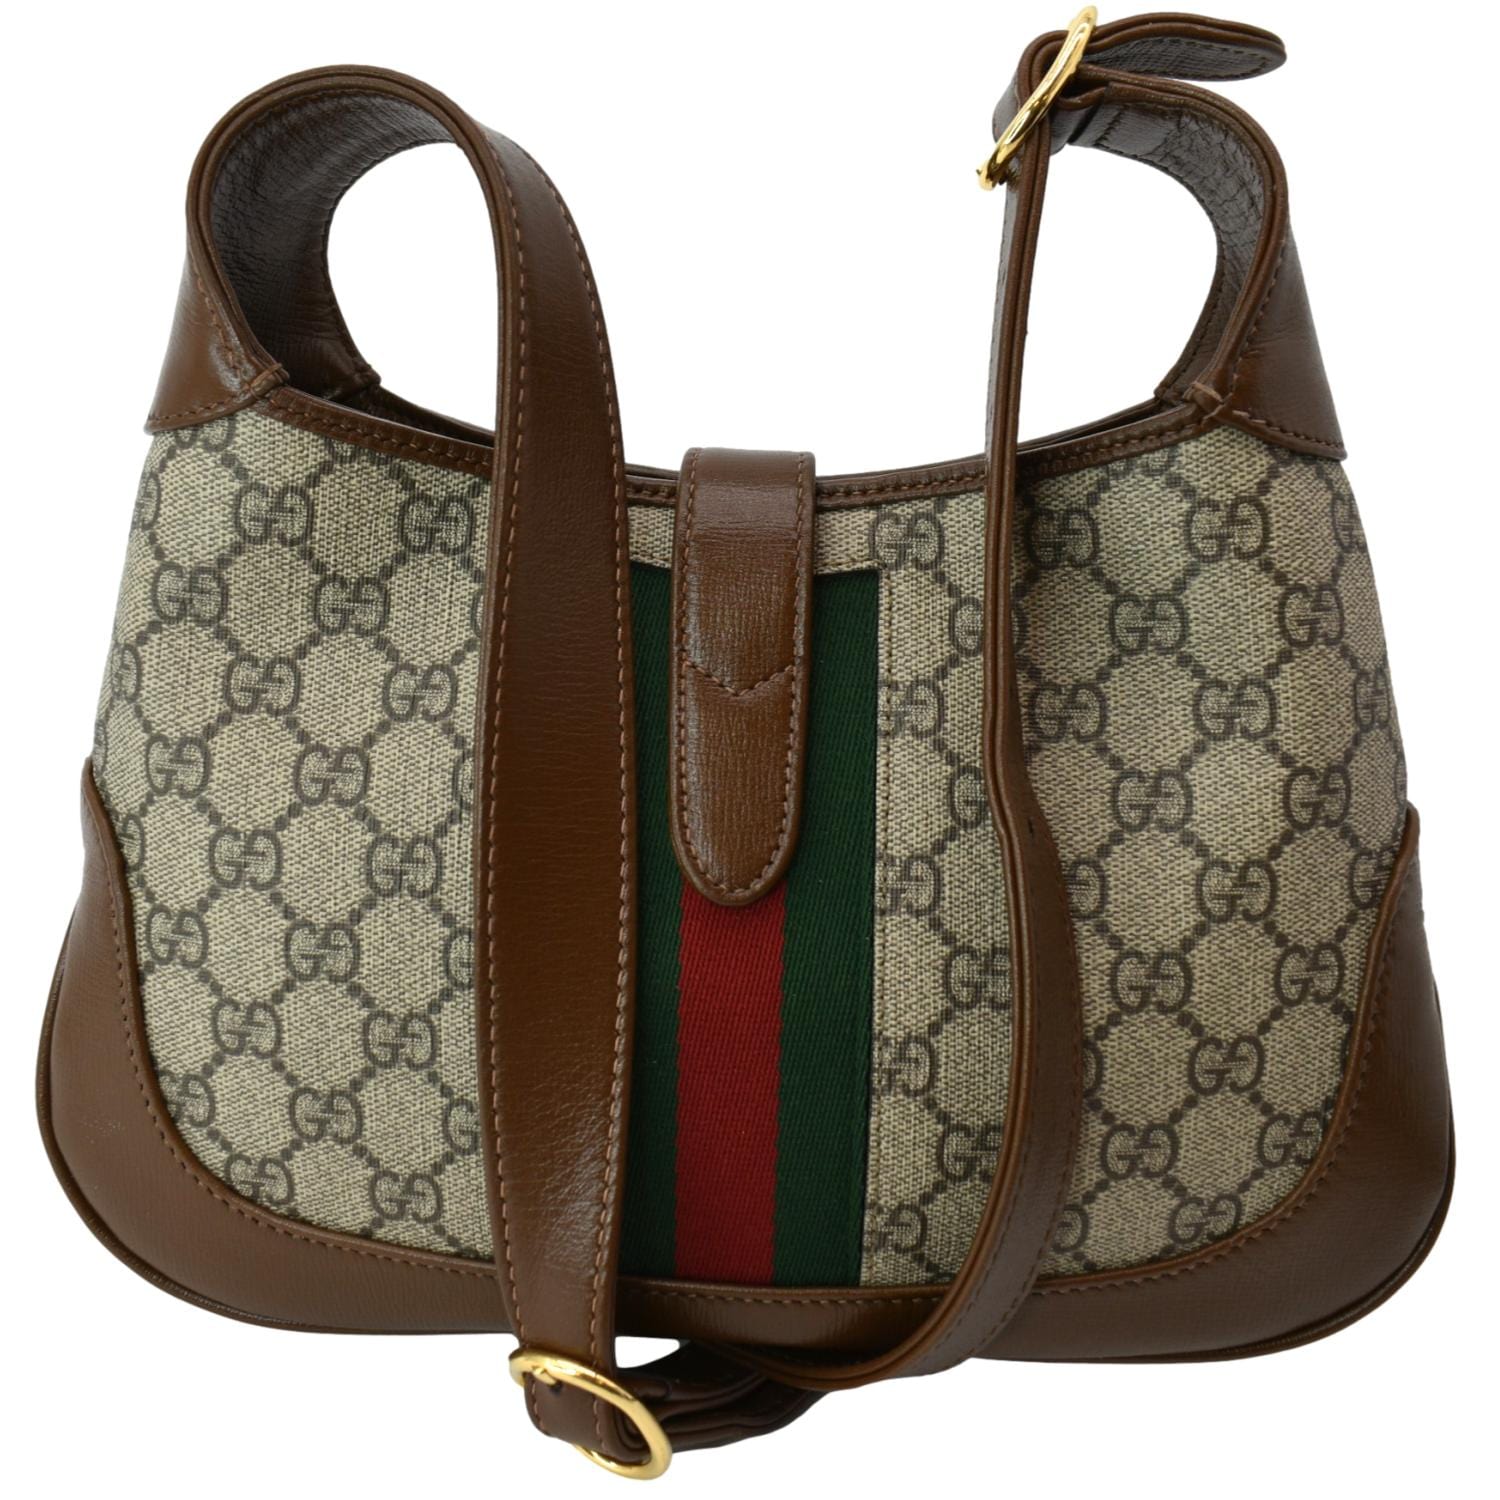 Jackie 1961 Medium Shoulder Bag in Multicoloured - Gucci